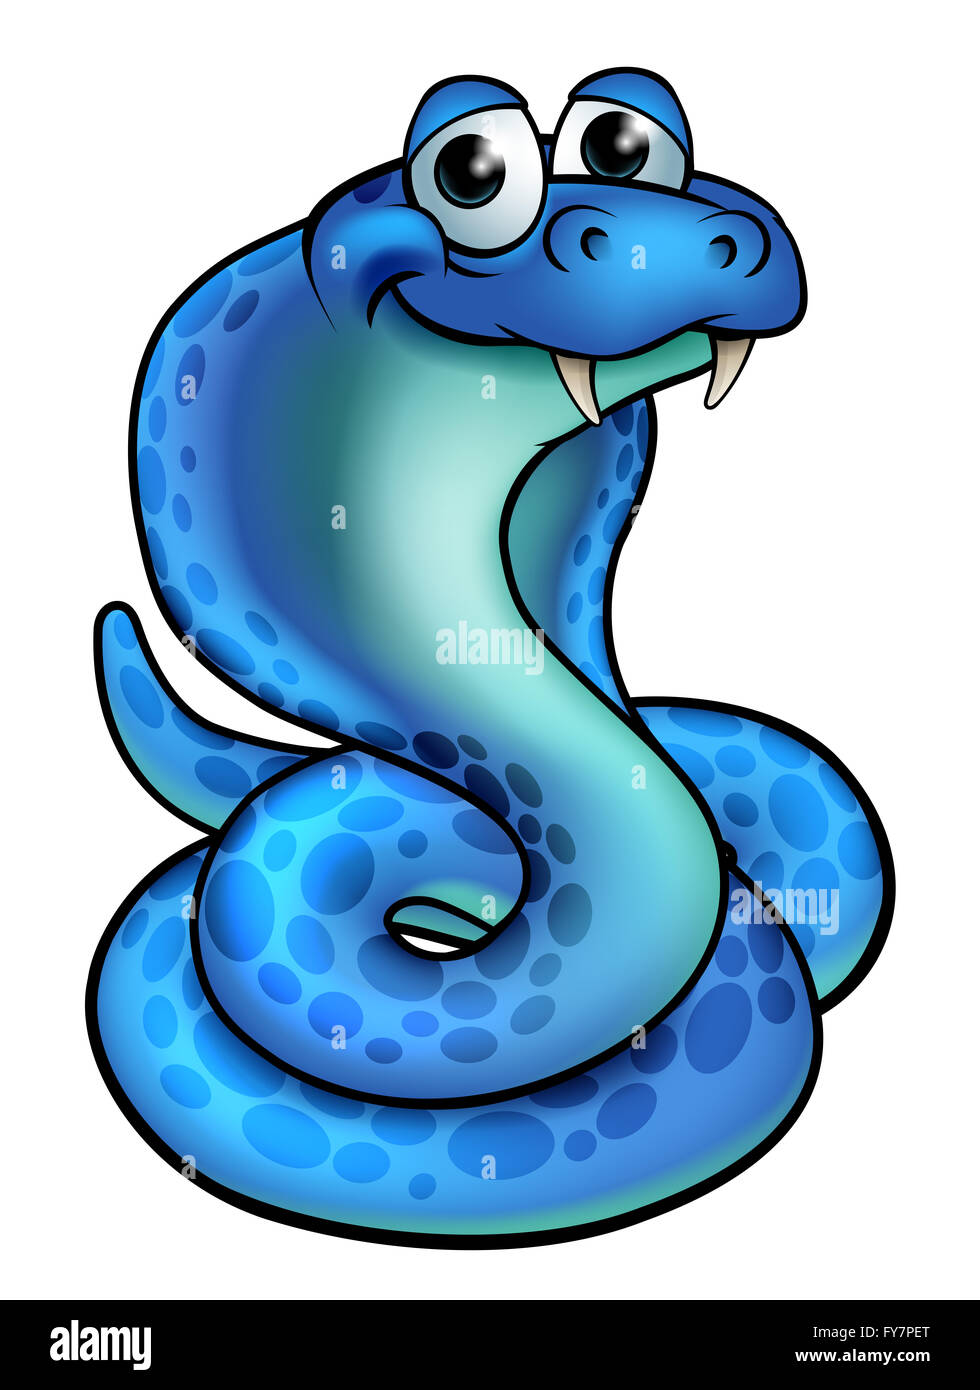 A friendly blue cartoon cobra snake Stock Photo - Alamy